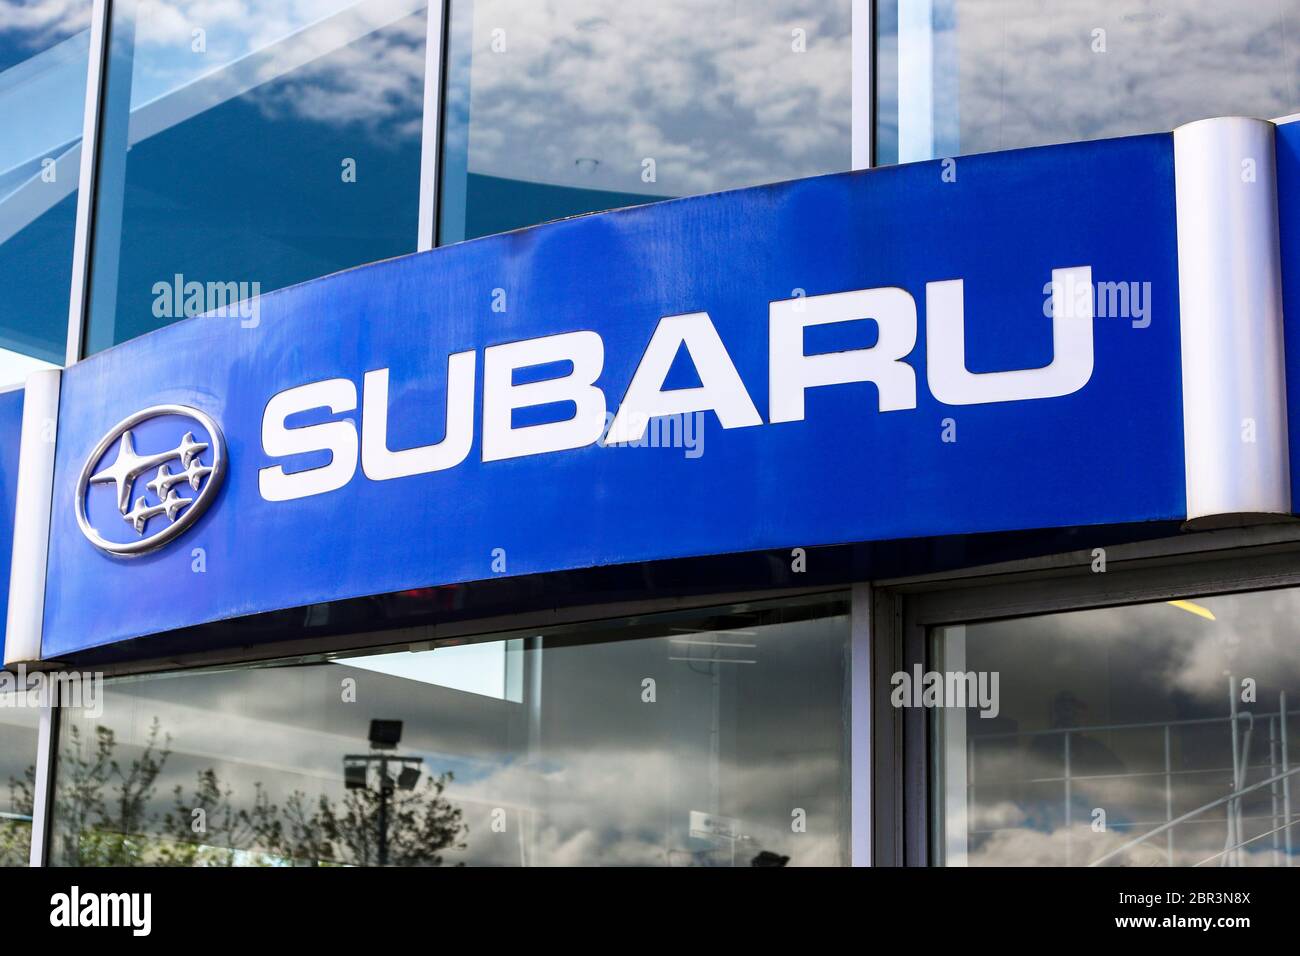 Company logo for Subaru motor cars and vehicles, outside a car showroom, Ayr, UK Stock Photo